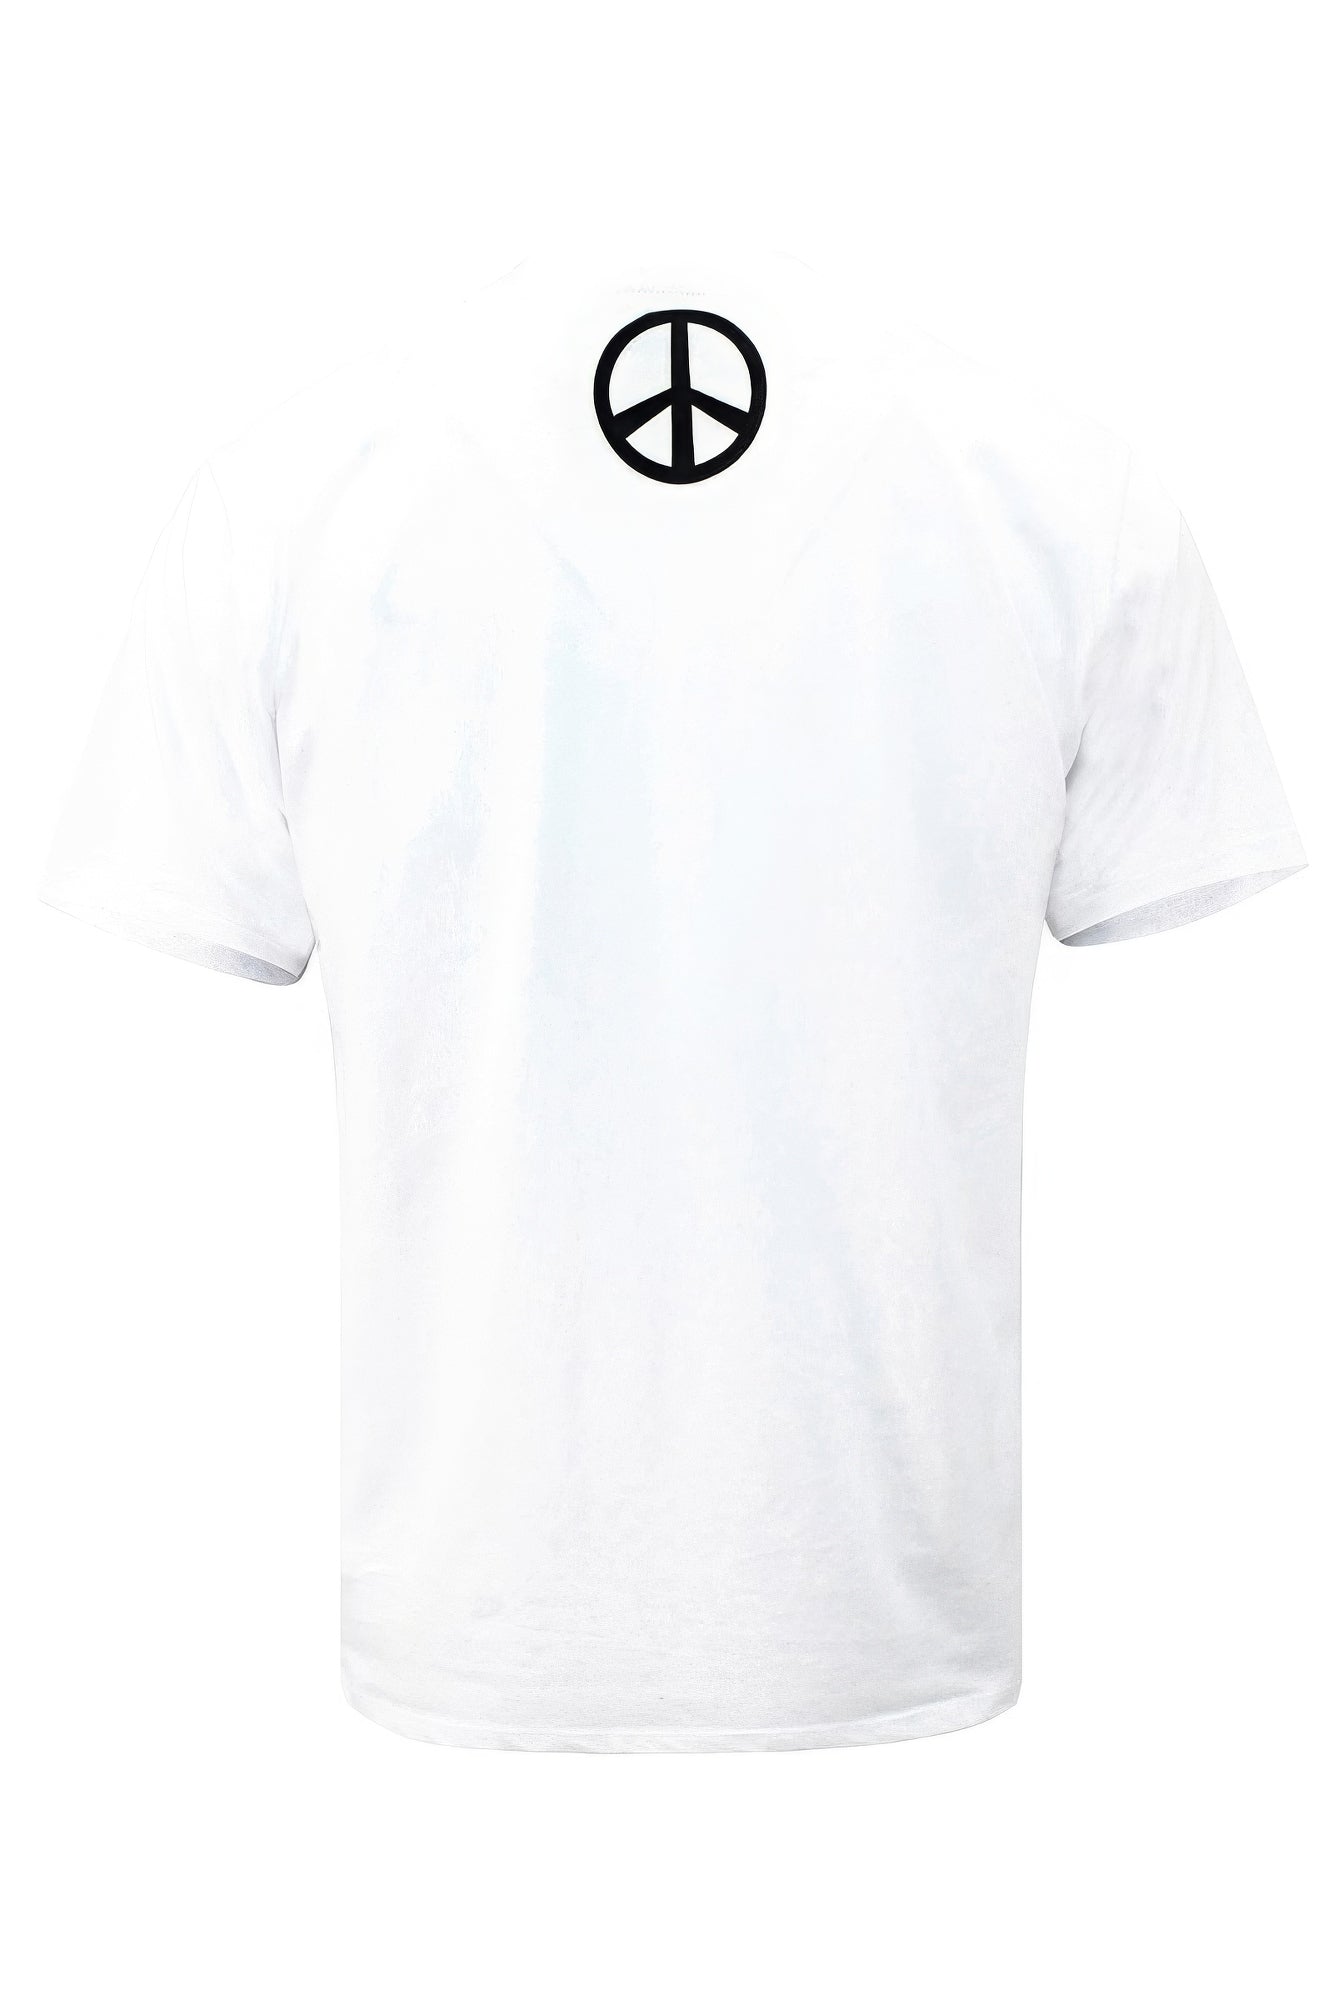 Peace Happiness T-shirts - Teresa's Fashionista LLC